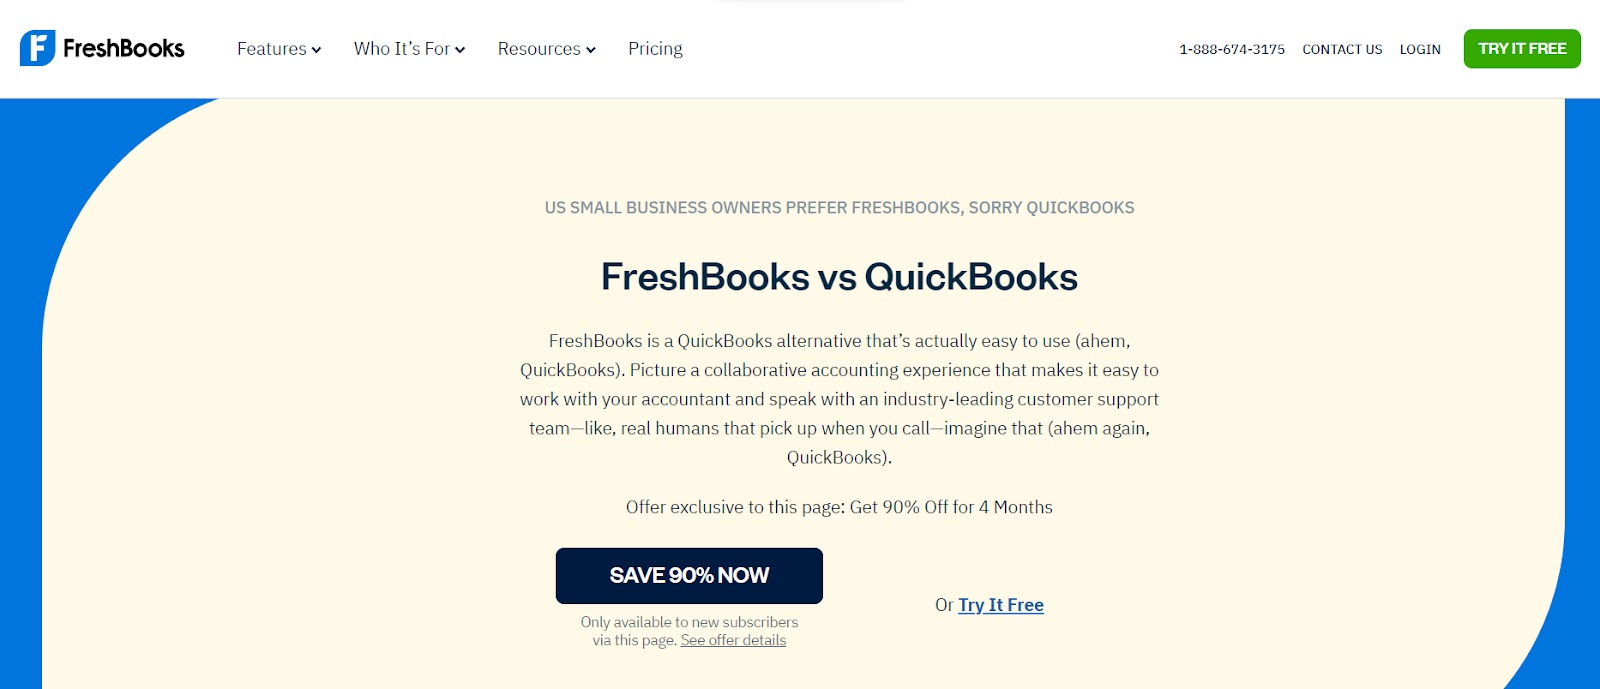 "FreshBooks vs. QuickBooks" comparison on FreshBooks's page